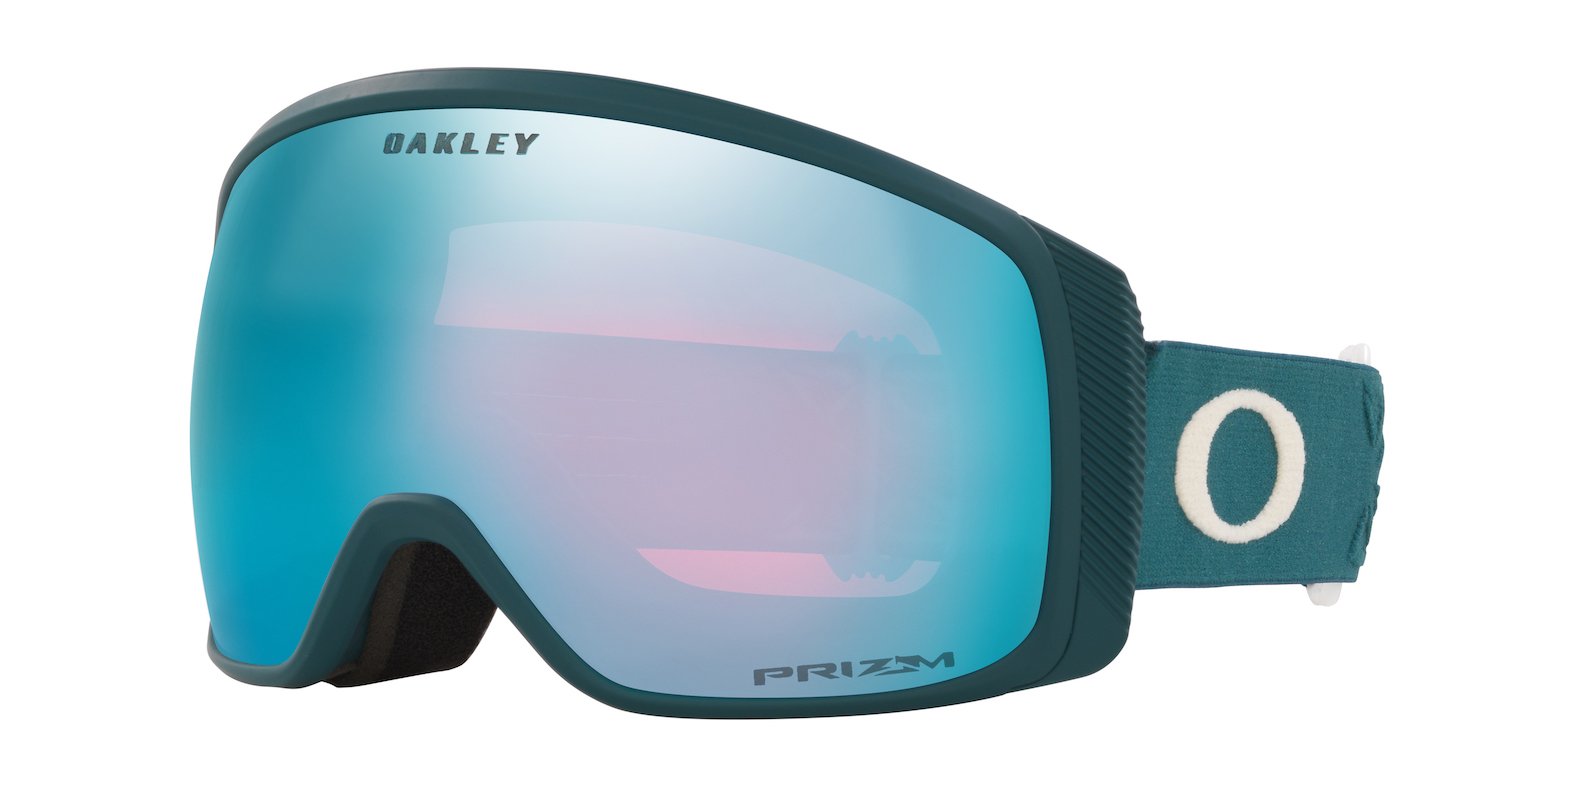 Oakley FW20/21 Goggles